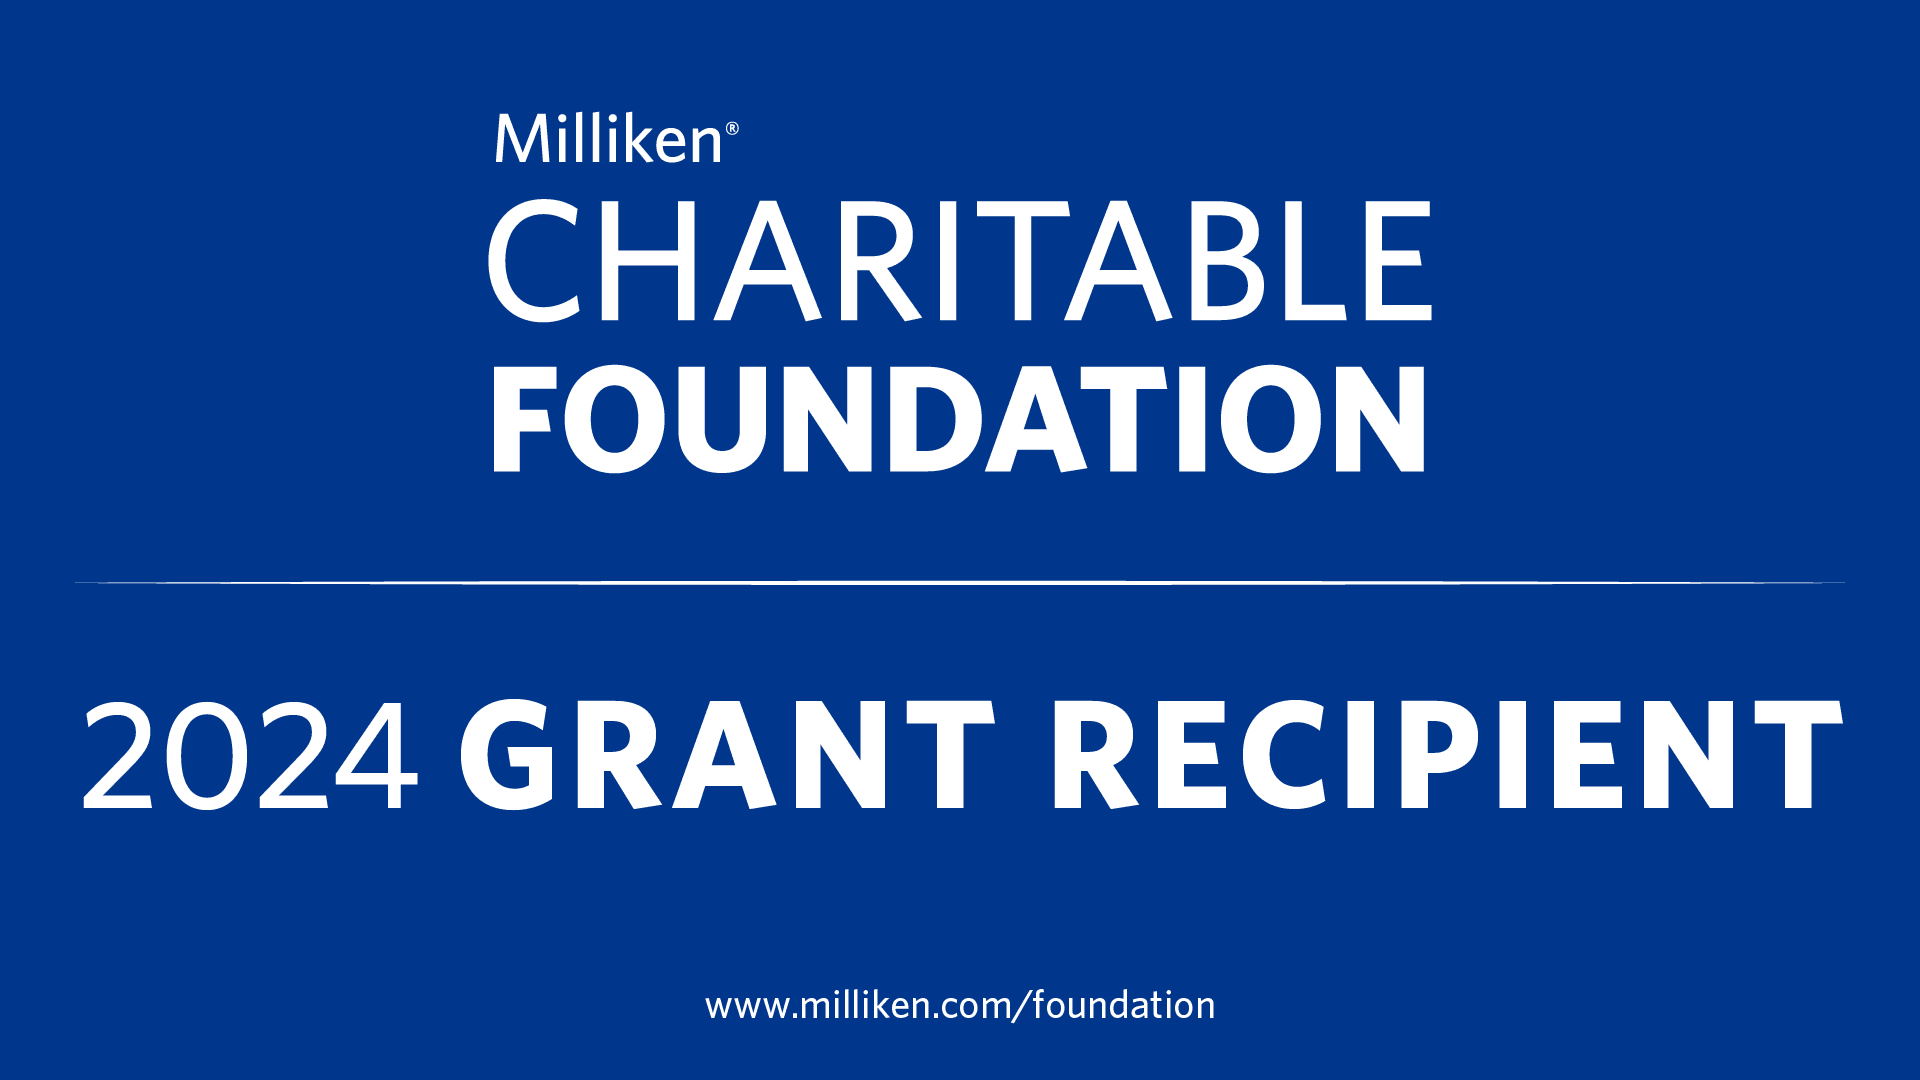 the Milliken & Company Charitable Foundation 2024 Grant branding